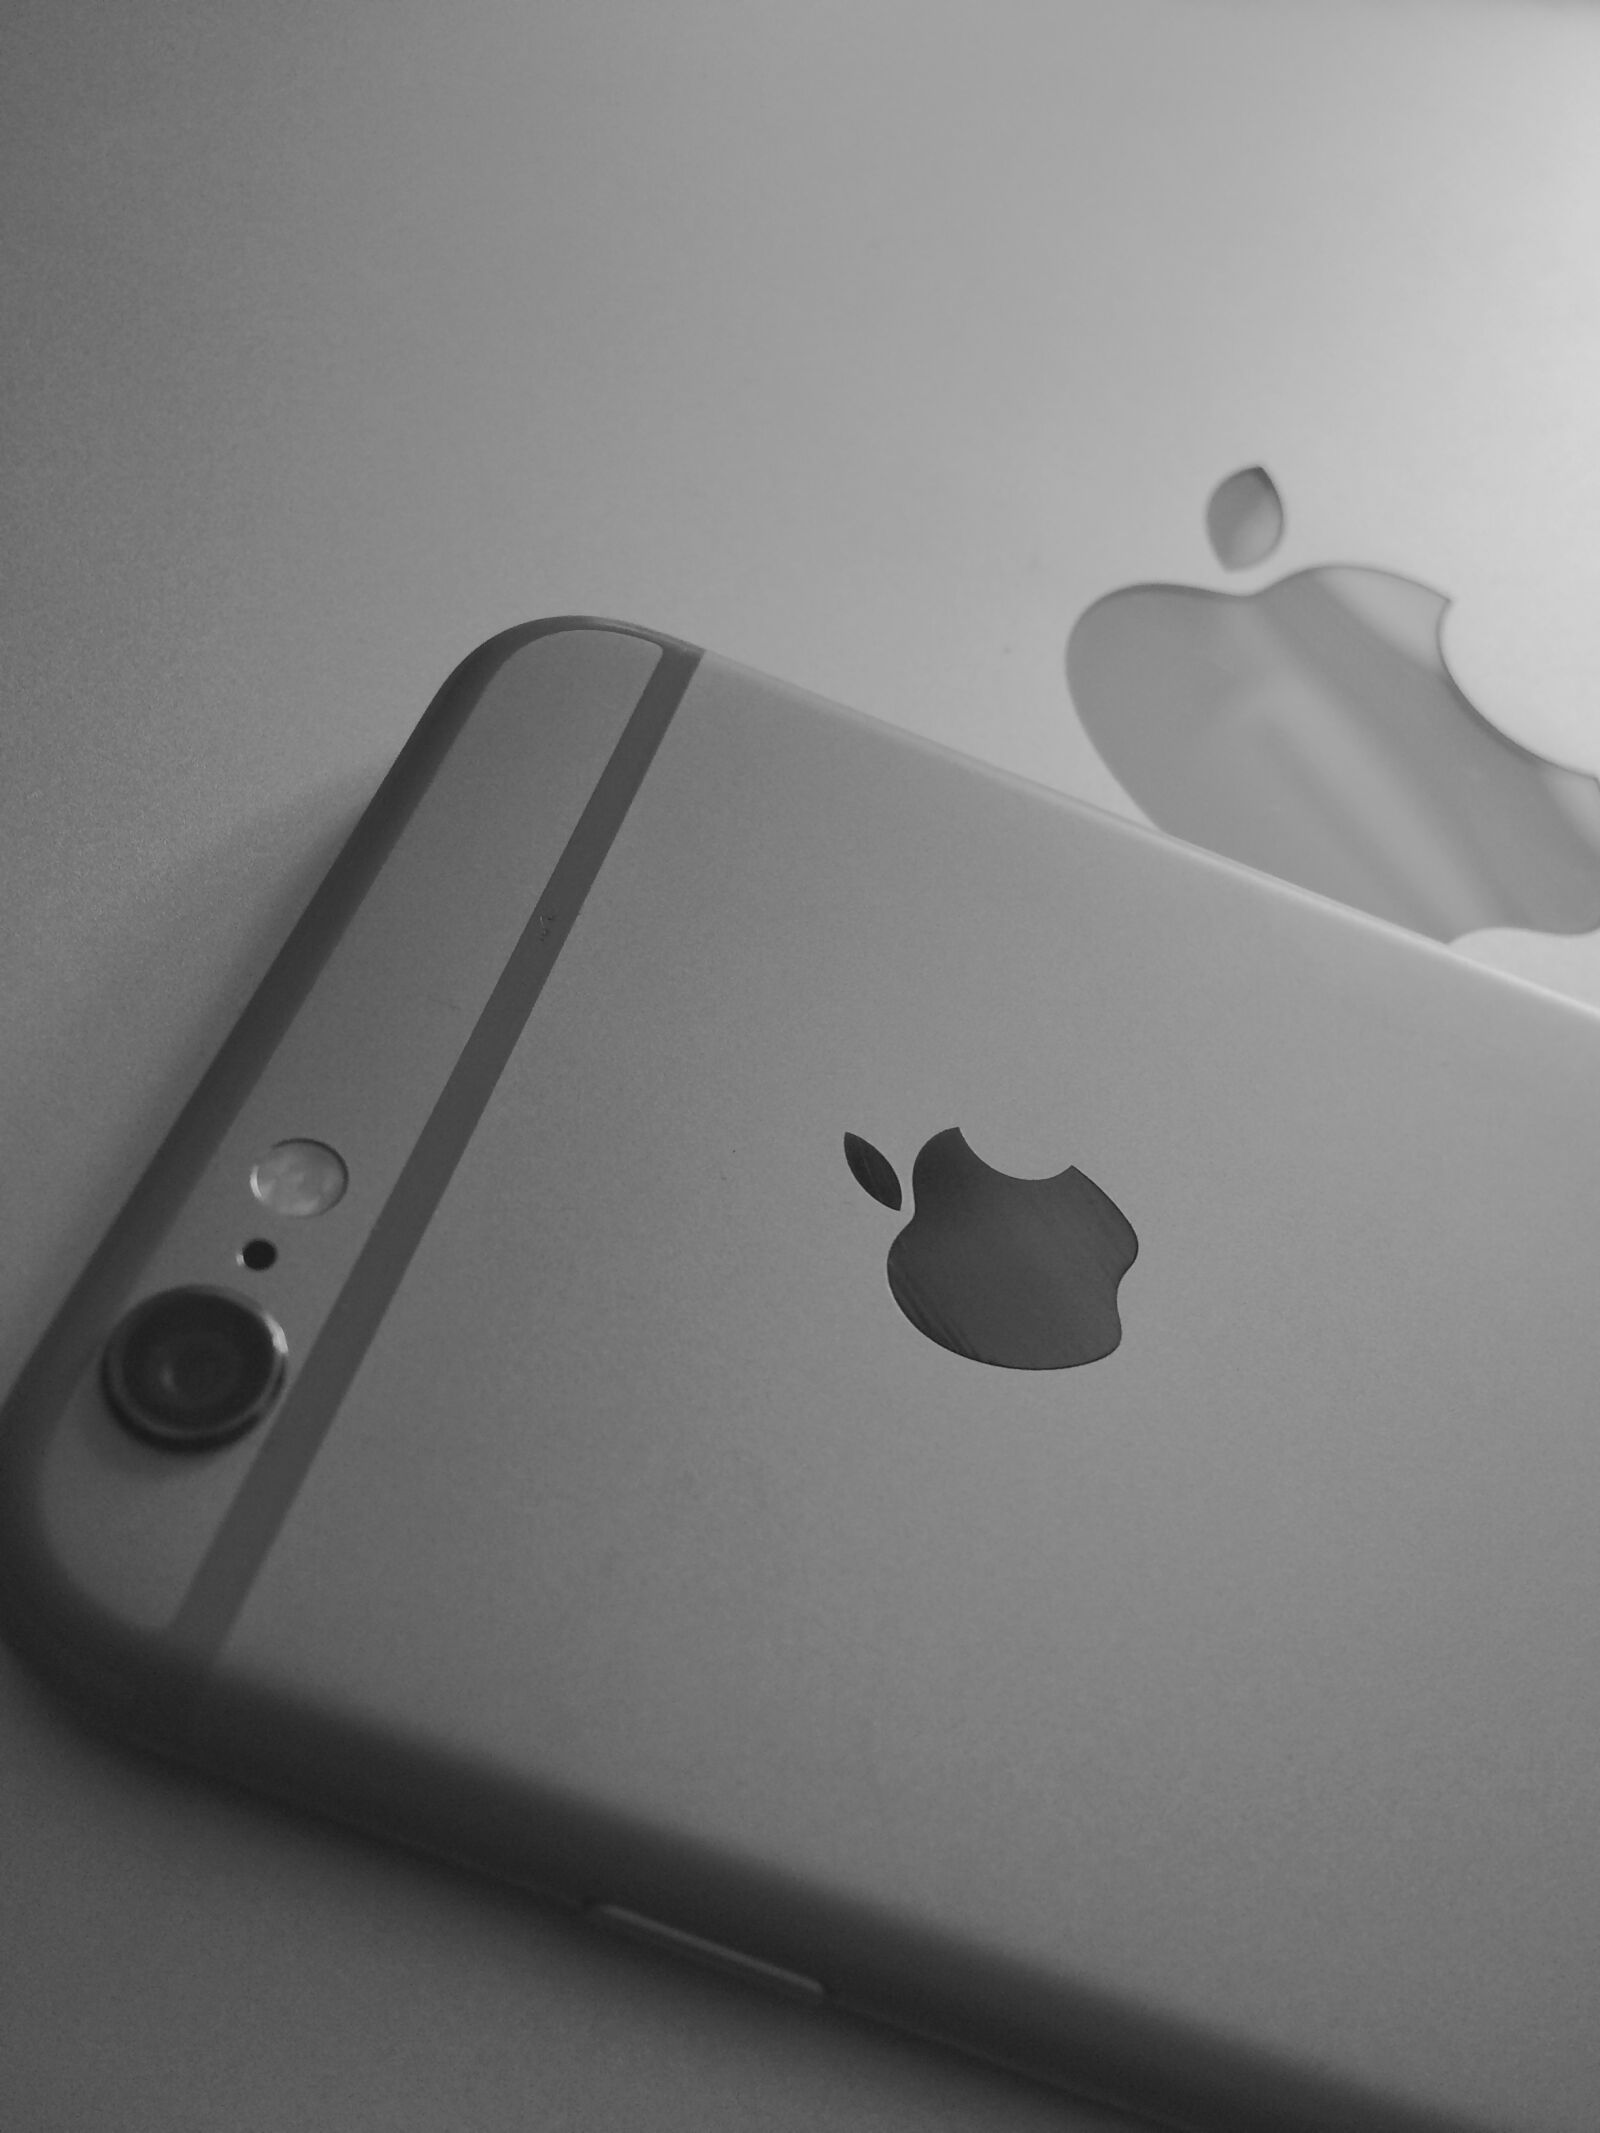 Apple iPhone 5s sample photo